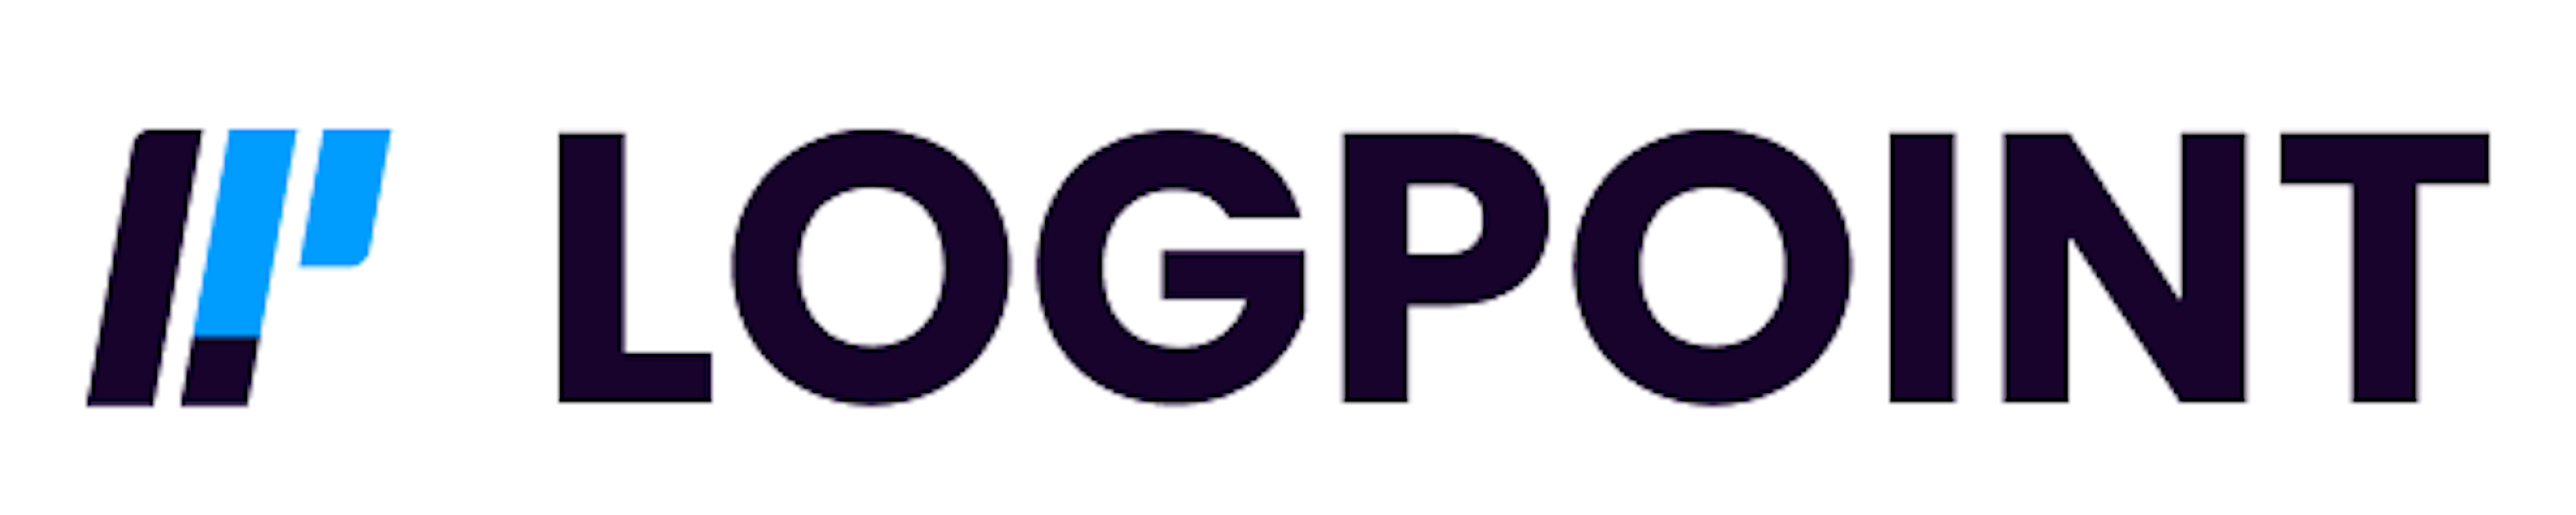 LogPoint Logo